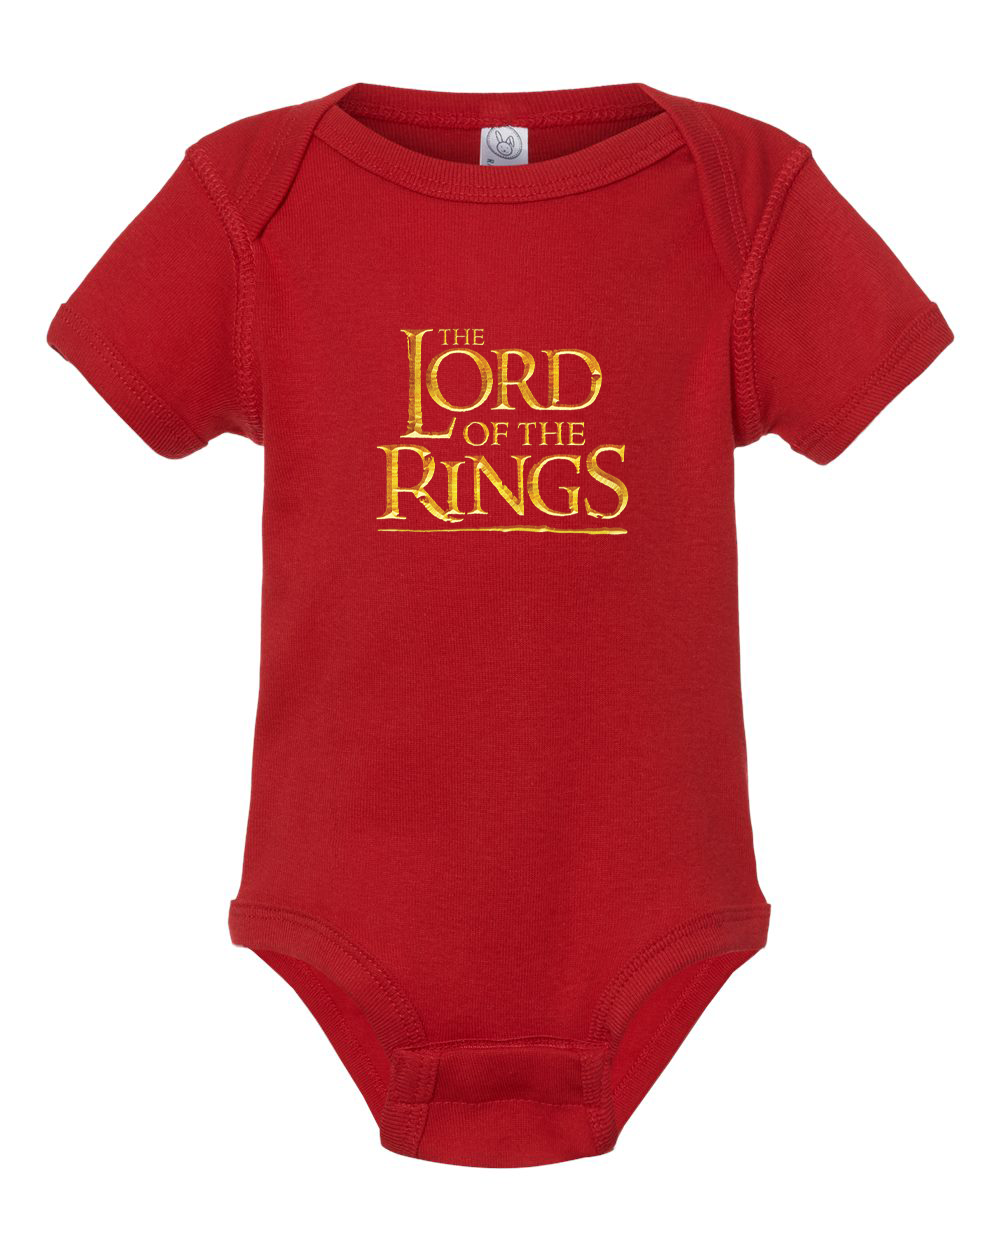 The Lord of the Rings Movie Baby Romper Onesie